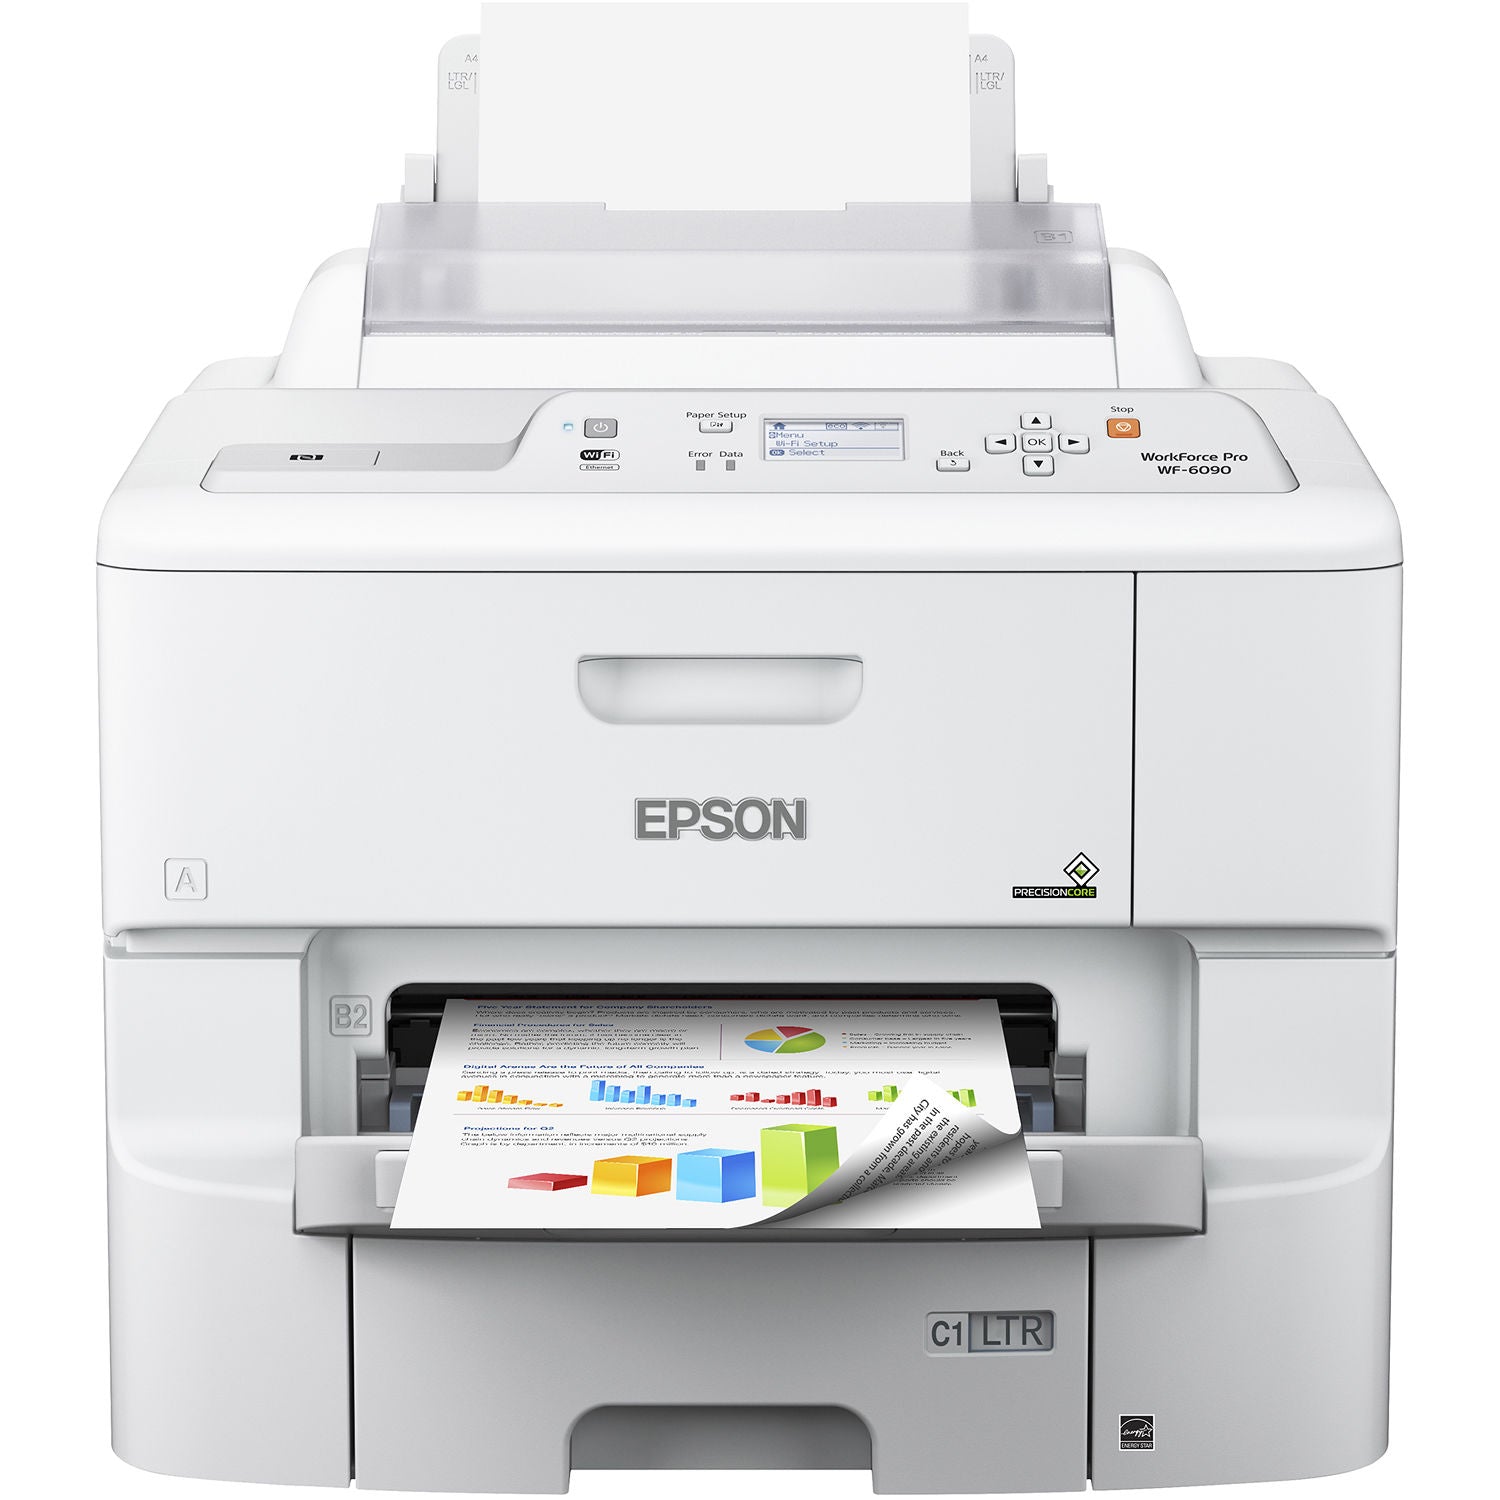 Where To Buy Epson WorkForce Pro WF-6090 Inkjet Printer In Toronto